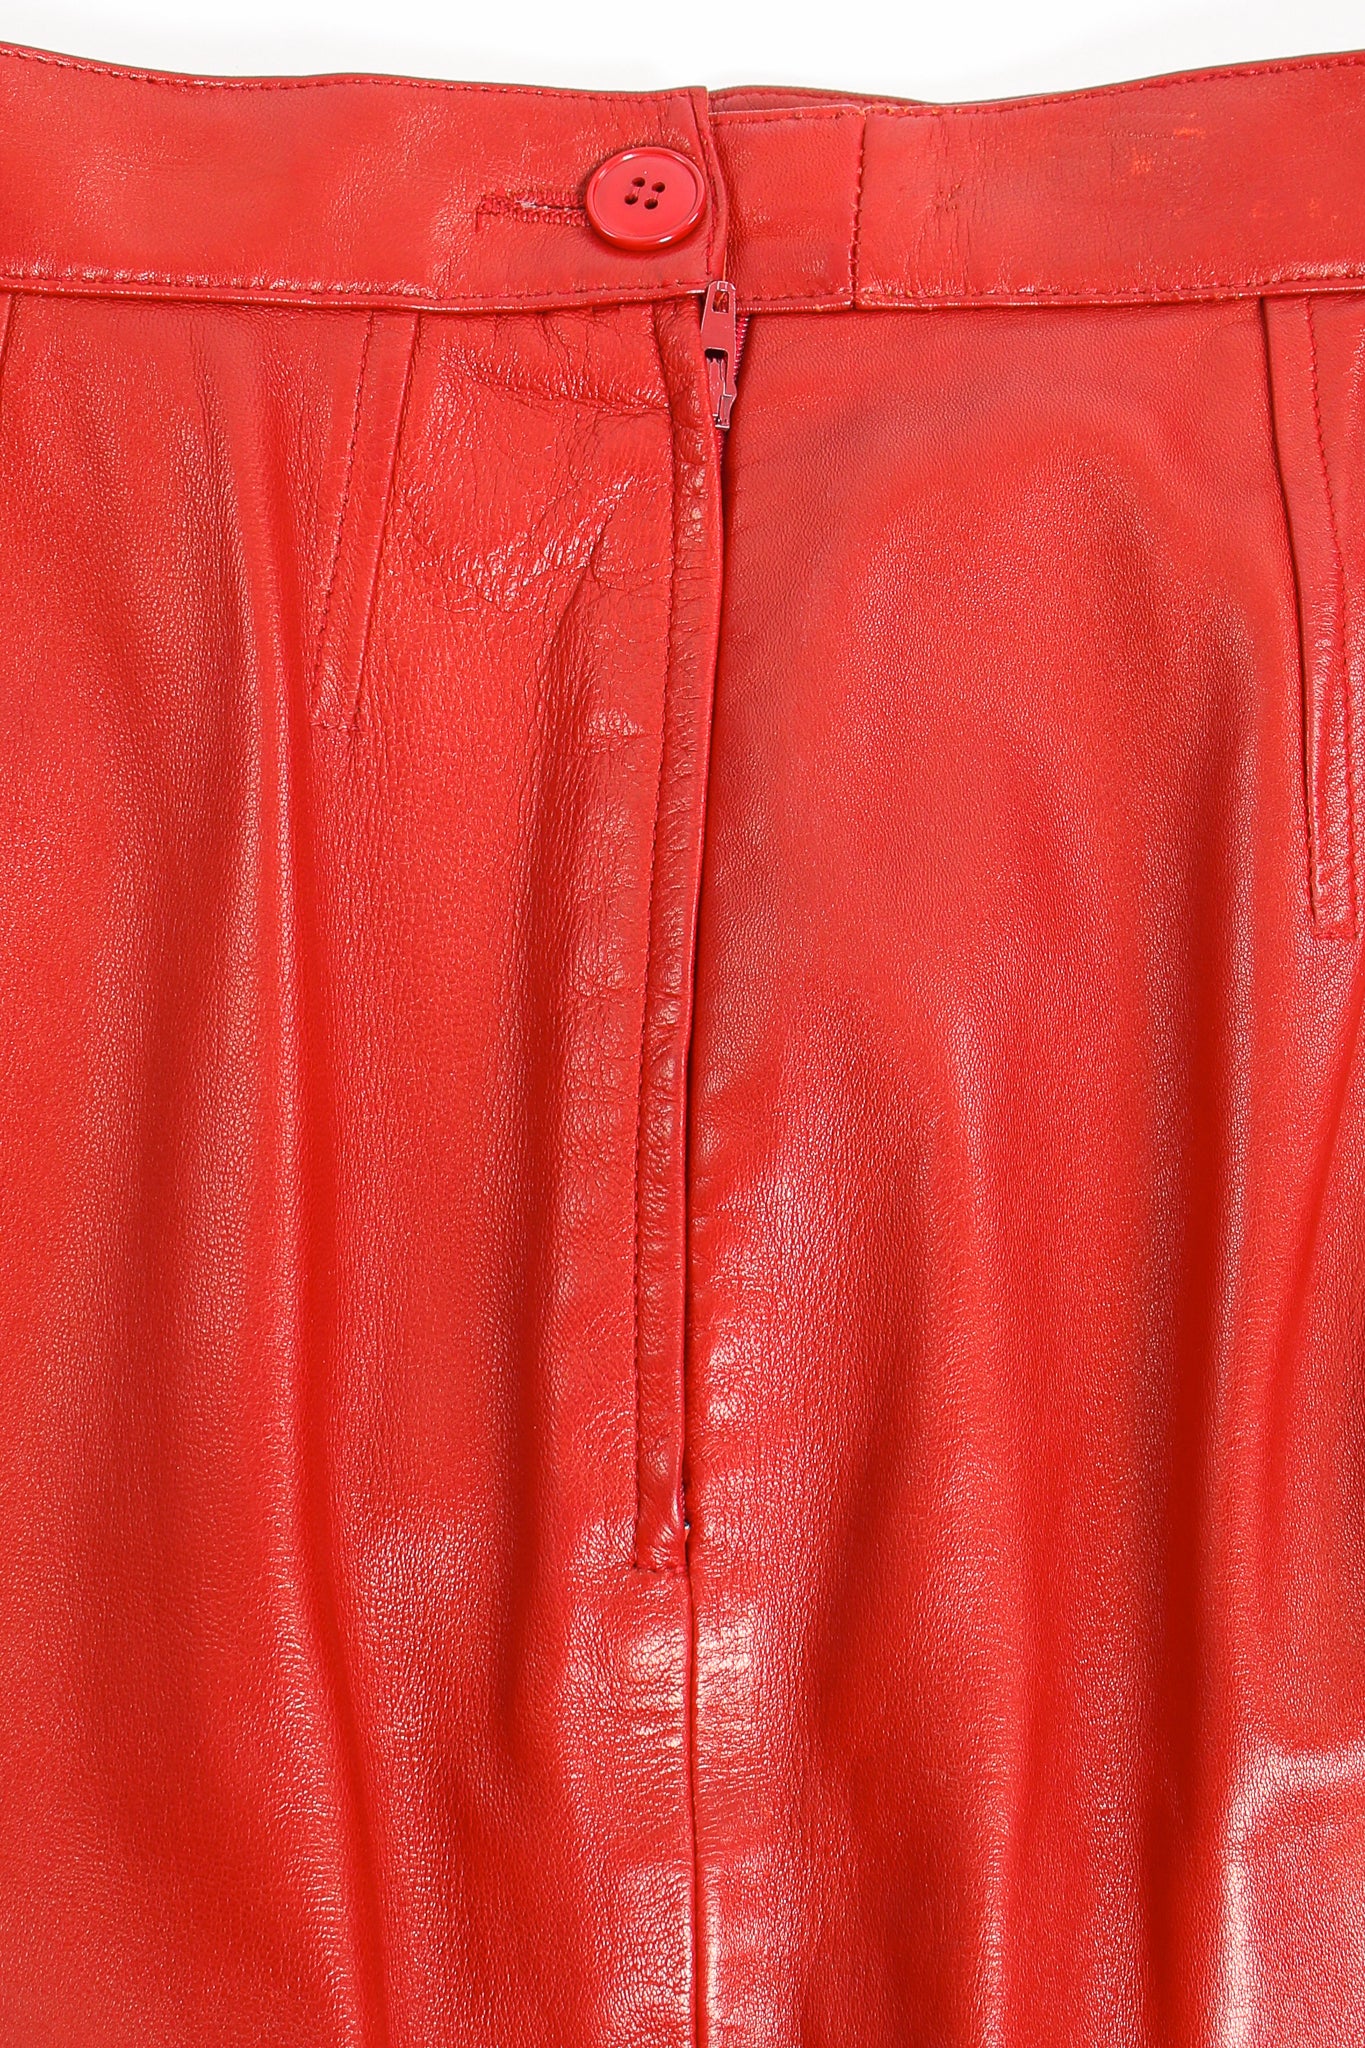 Vintage YSL Yves Saint Laurent 1988 Red Leather Skirt Suit skirt zip at Recess LA